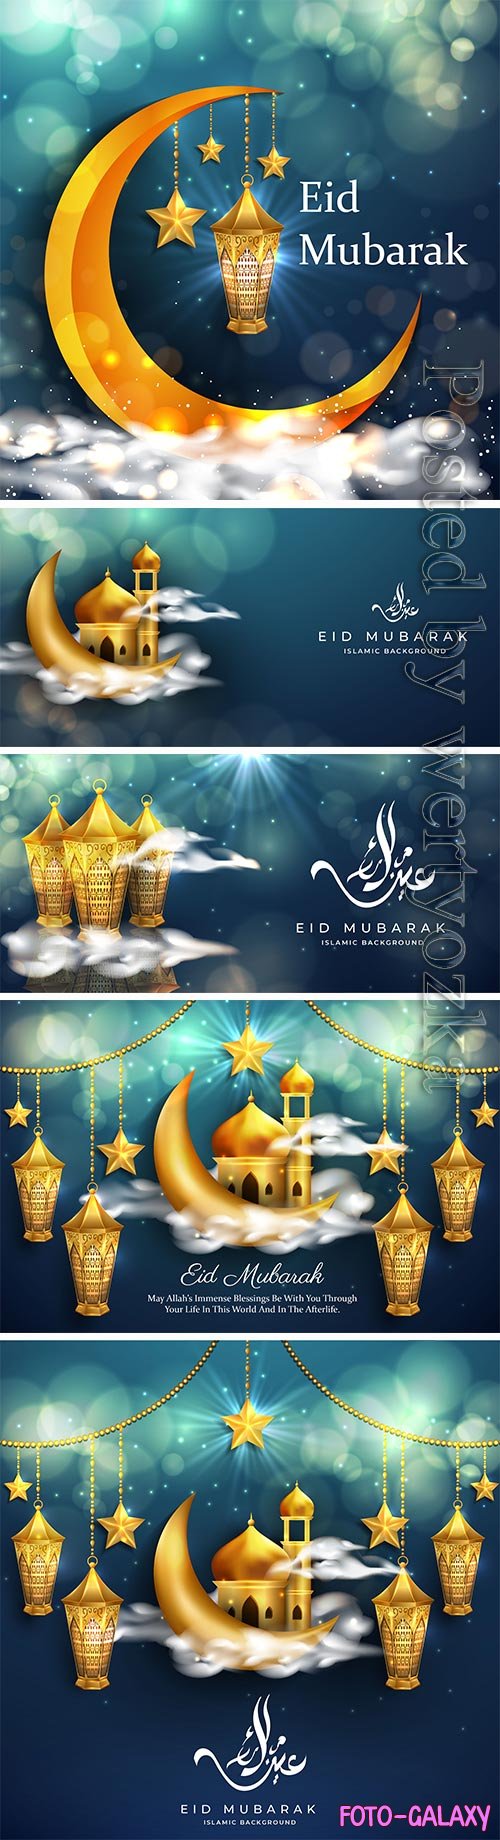 Eid mubarak background with realistic golden lanterns